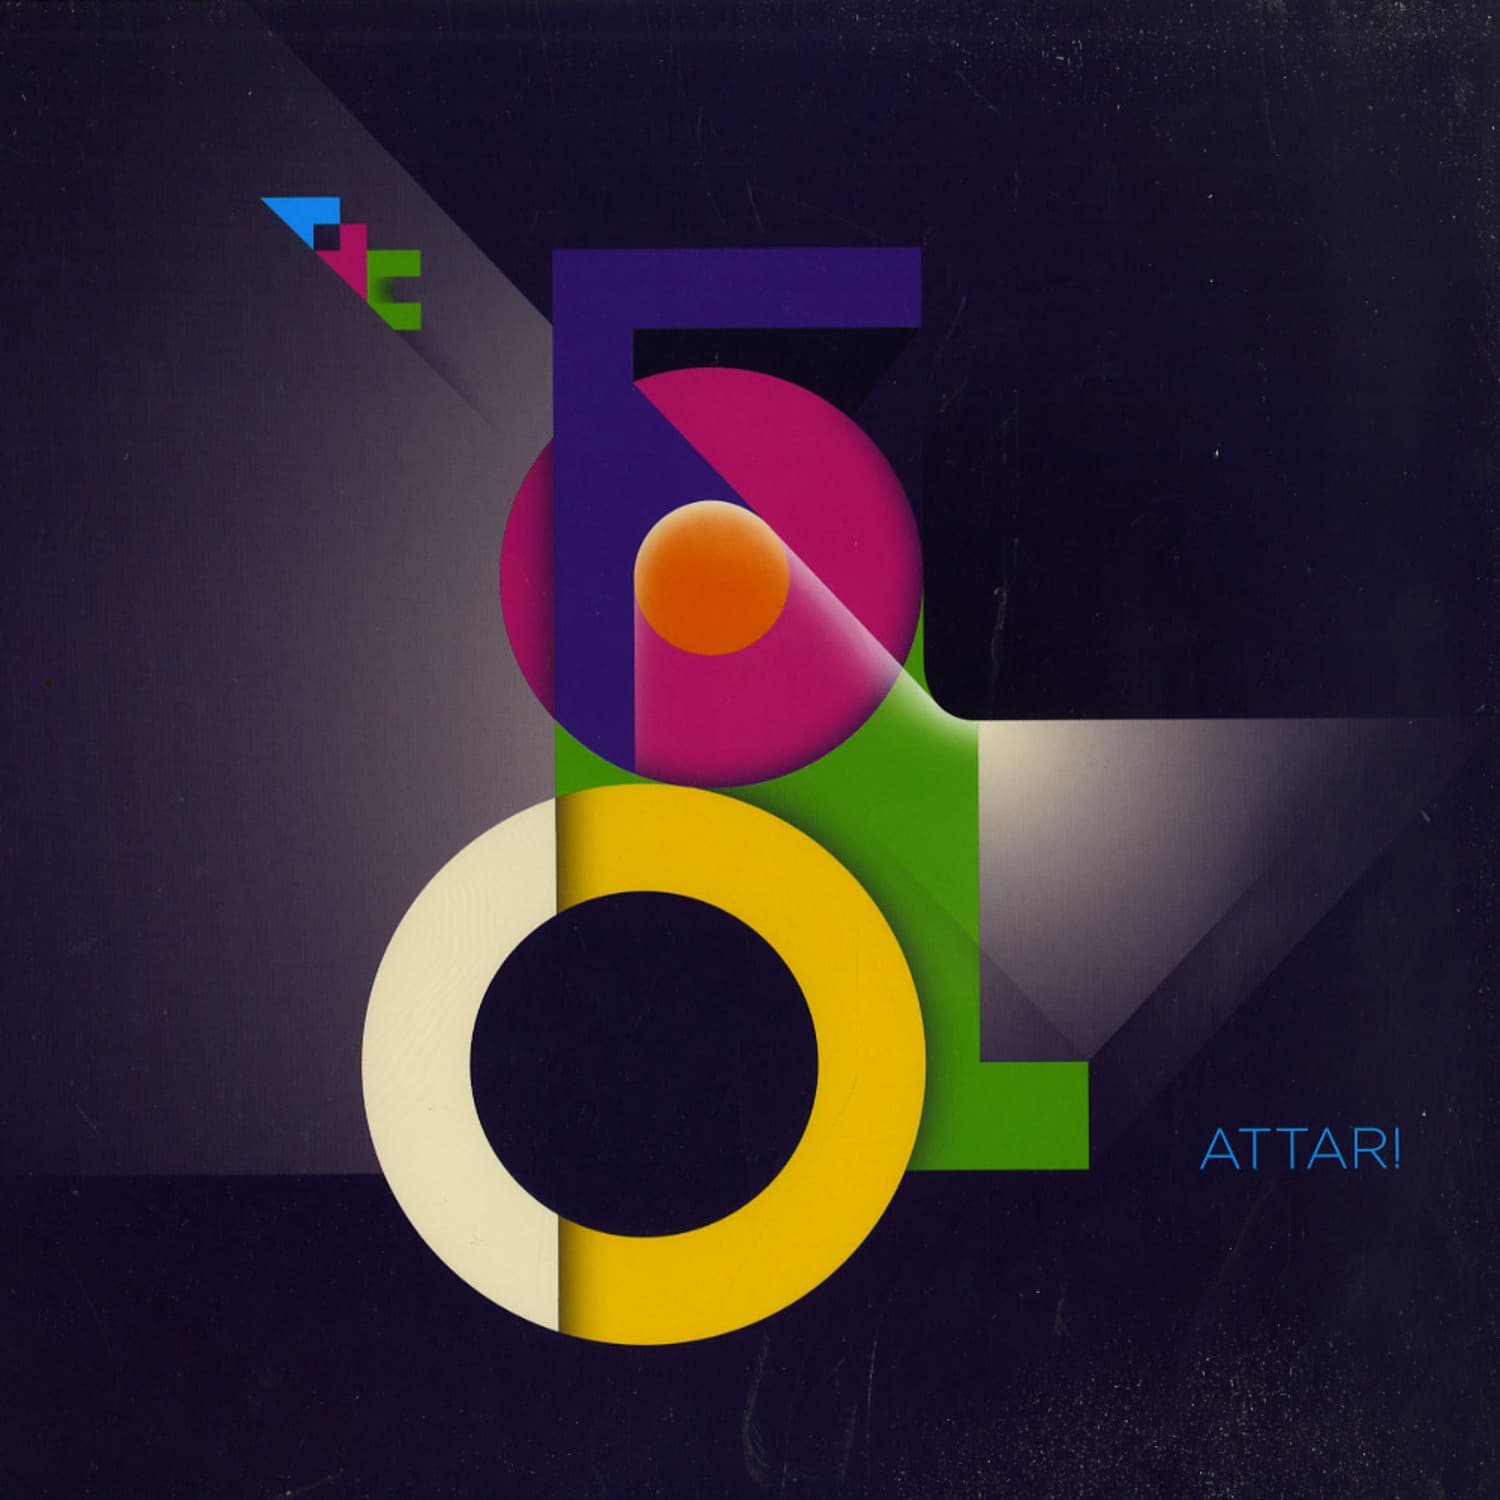 Attar! - THE FOOL